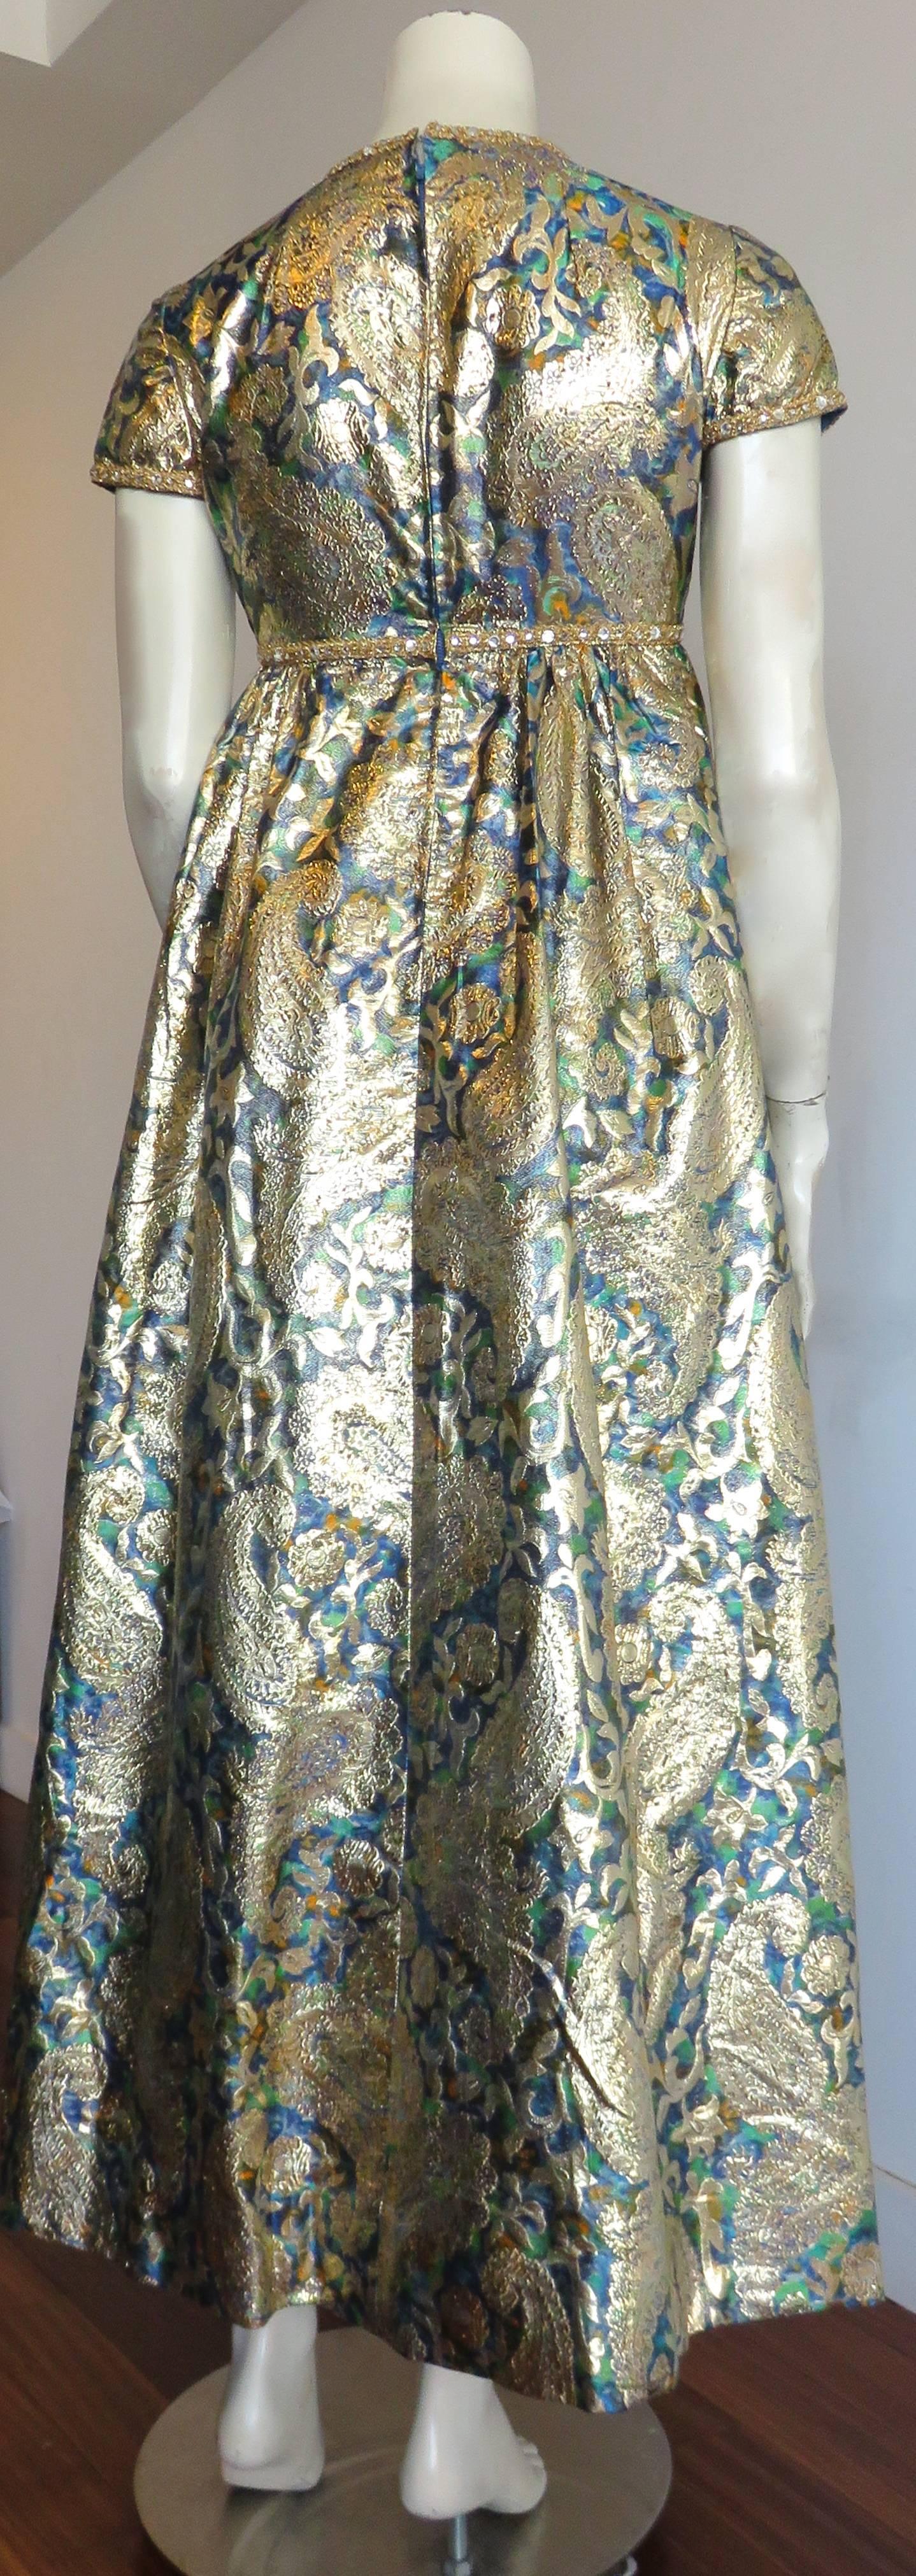 1960's MALCOLM STARR Colinda golden brocade evening gown dress 1